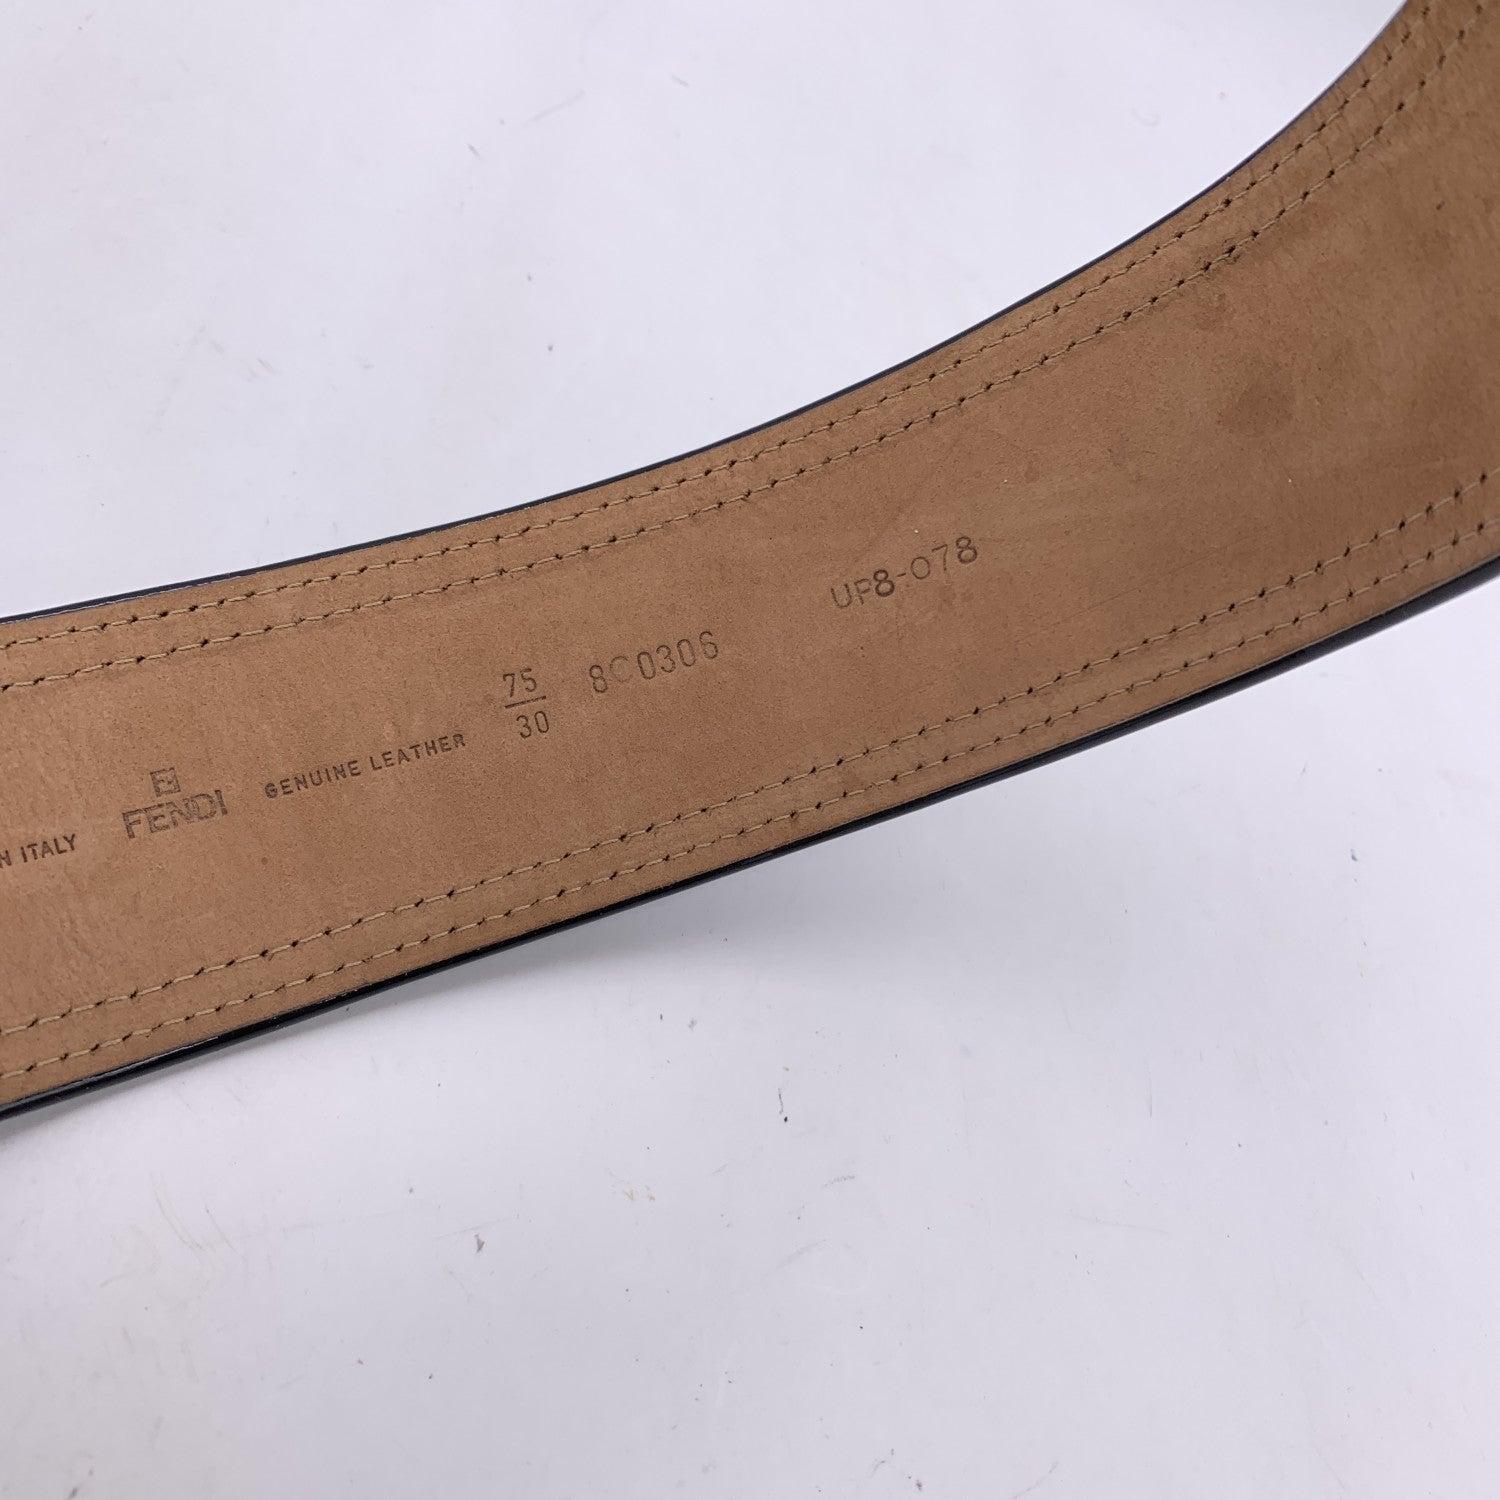 Fendi Black Leather B Buckle Wide Belt Patent Leather Size 75/30 2